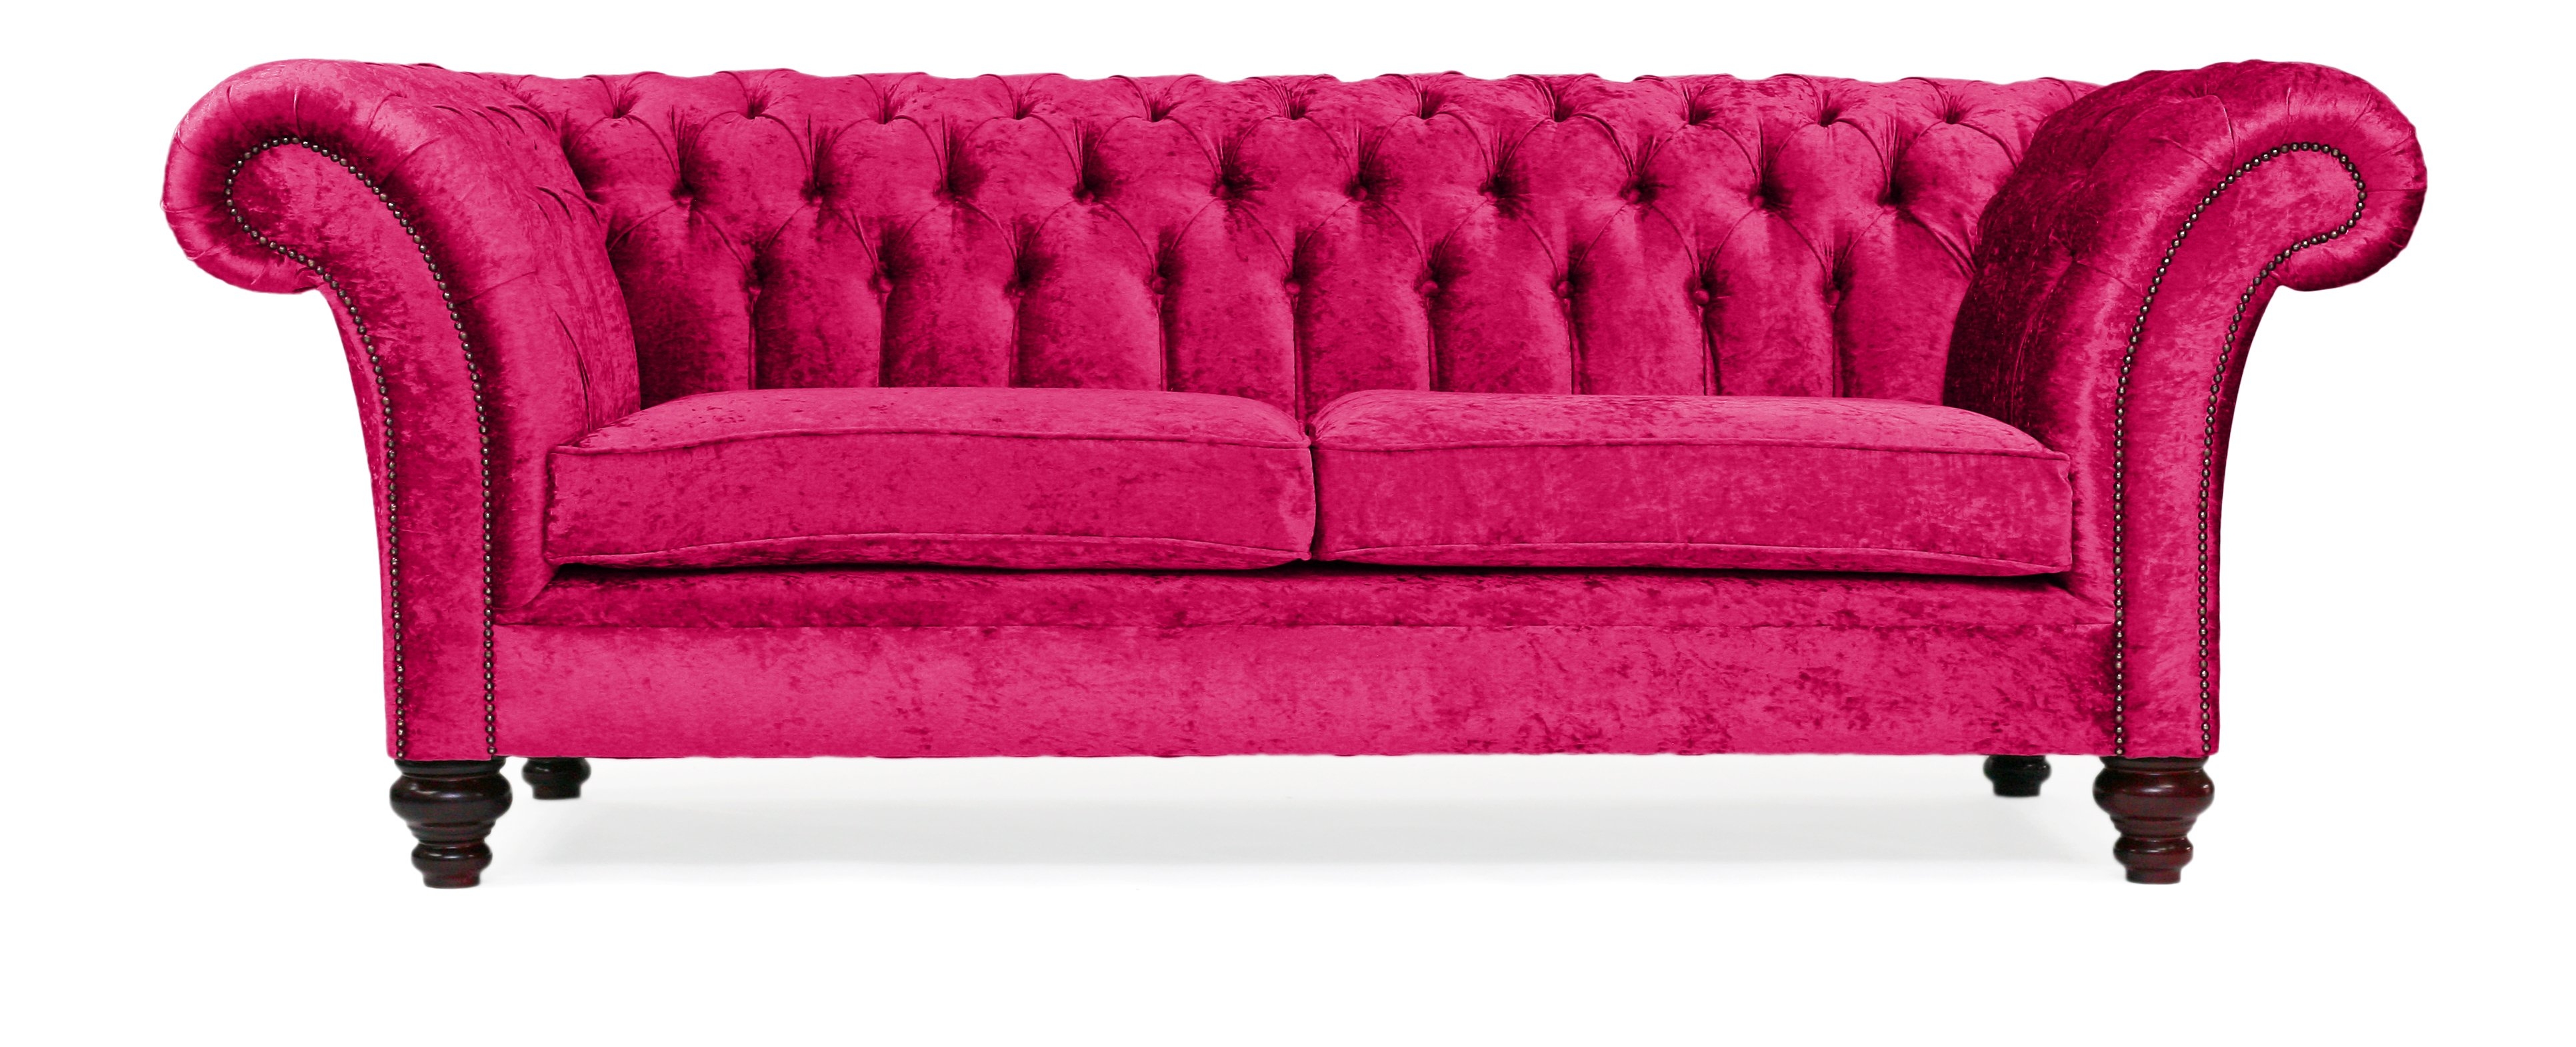 Portabello – Milano Chesterfield Sofa – Violet Zagros Velvet 4 Seater – High Quality Velvet – Purple – Chesterfield – 4 Seater 257 X 83 X 88 cm